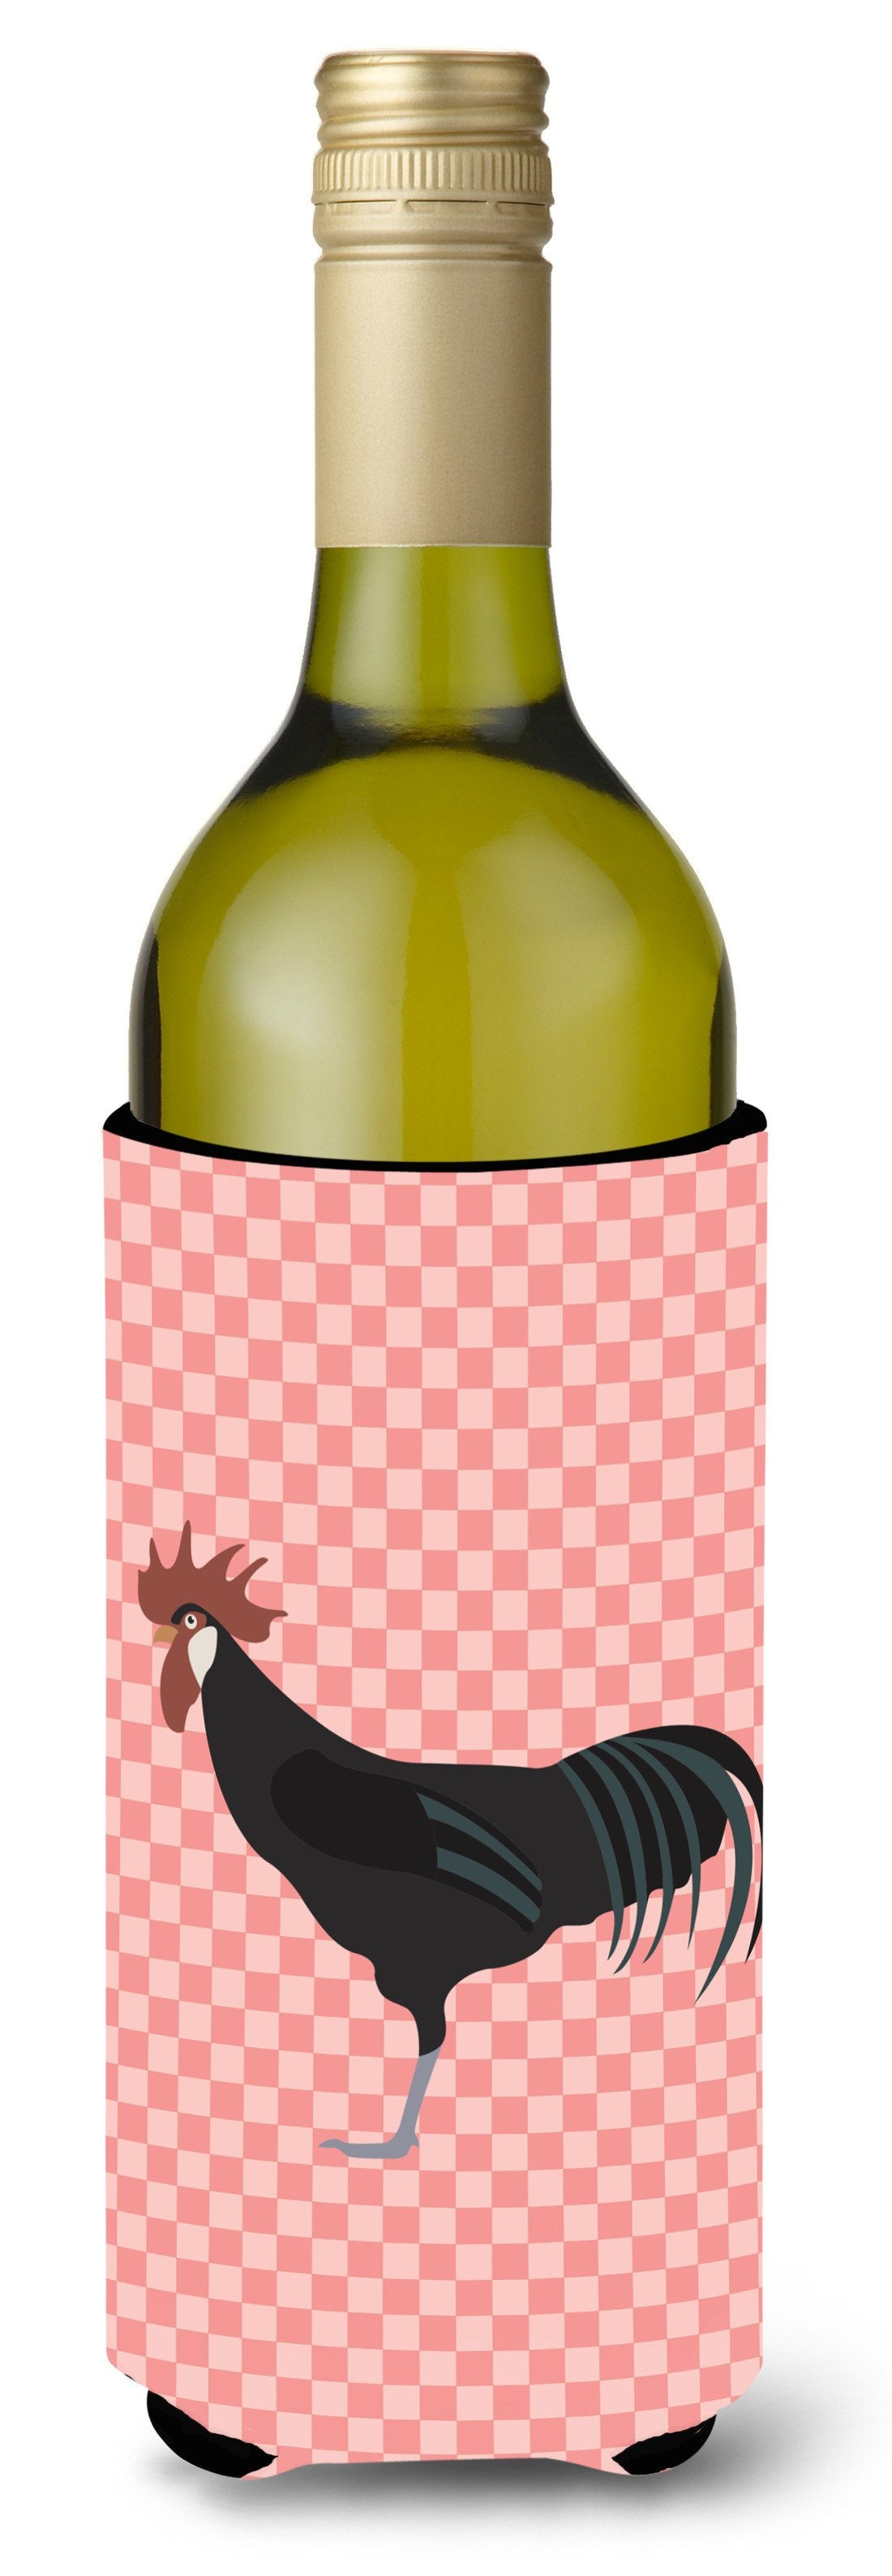 Minorca Ctalalan Chicken Pink Check Wine Bottle Beverge Insulator Hugger BB7841LITERK by Caroline's Treasures